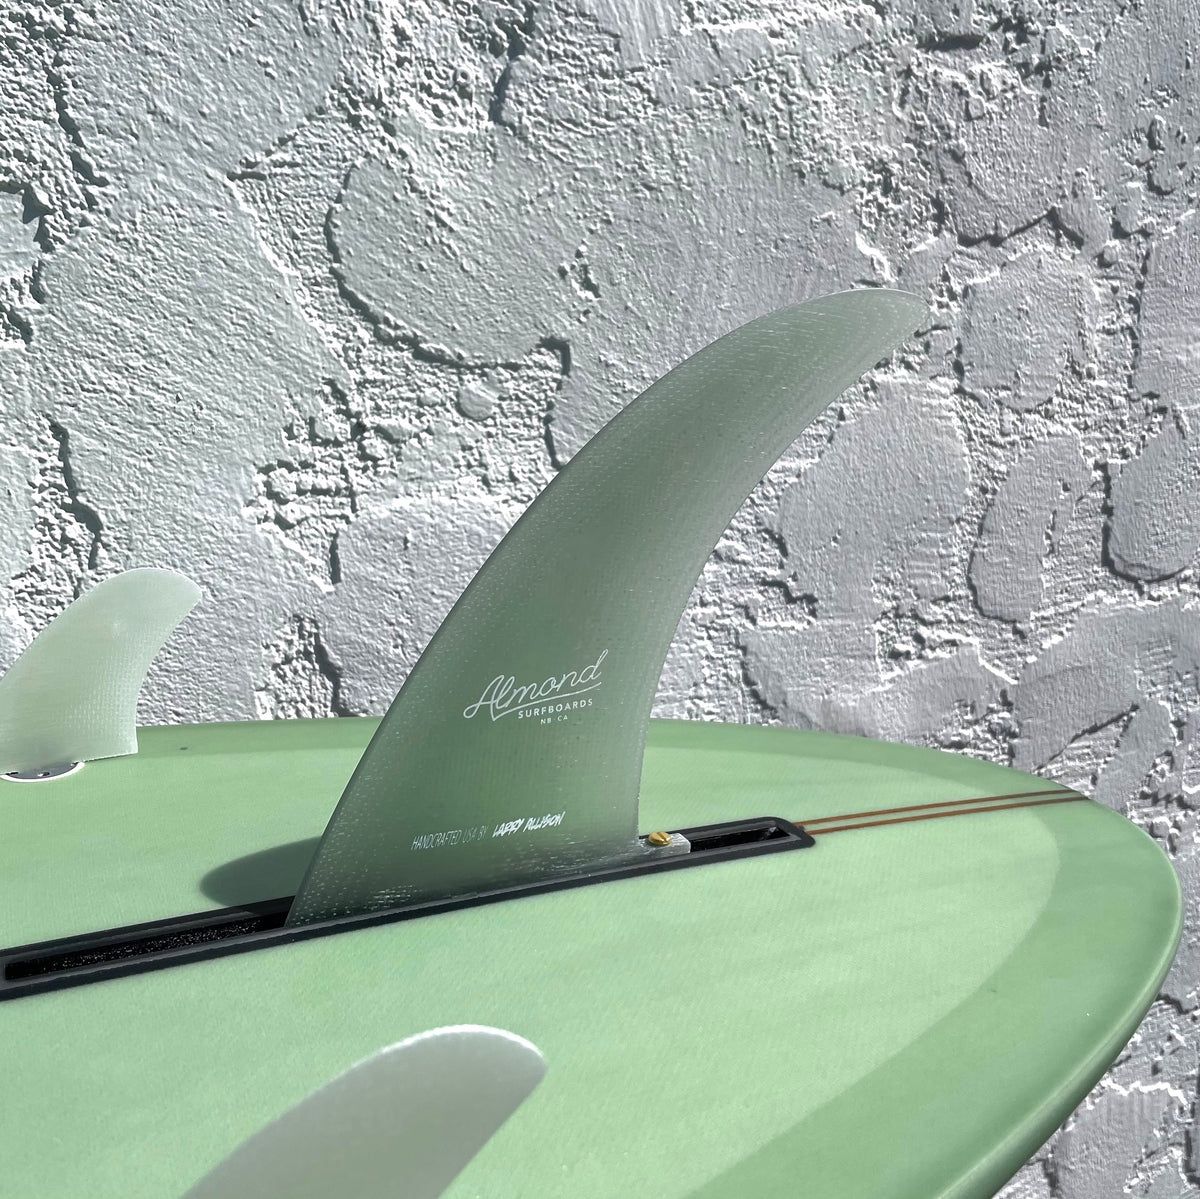 Almond surfboards 7" FLEX FIN